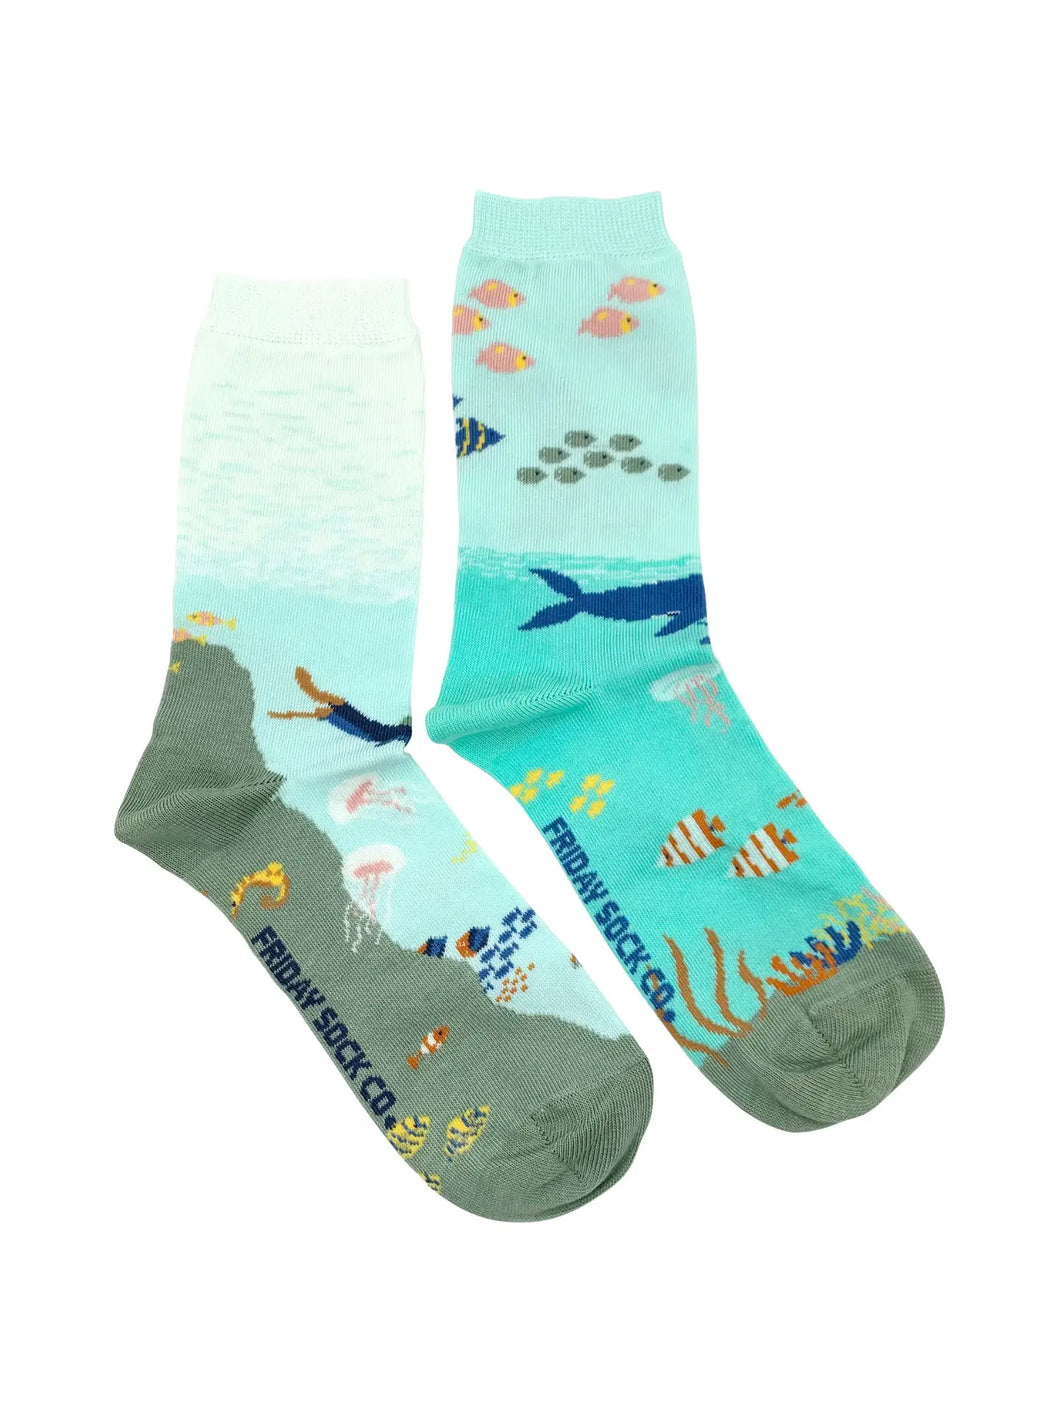 women's socks - underwater scene